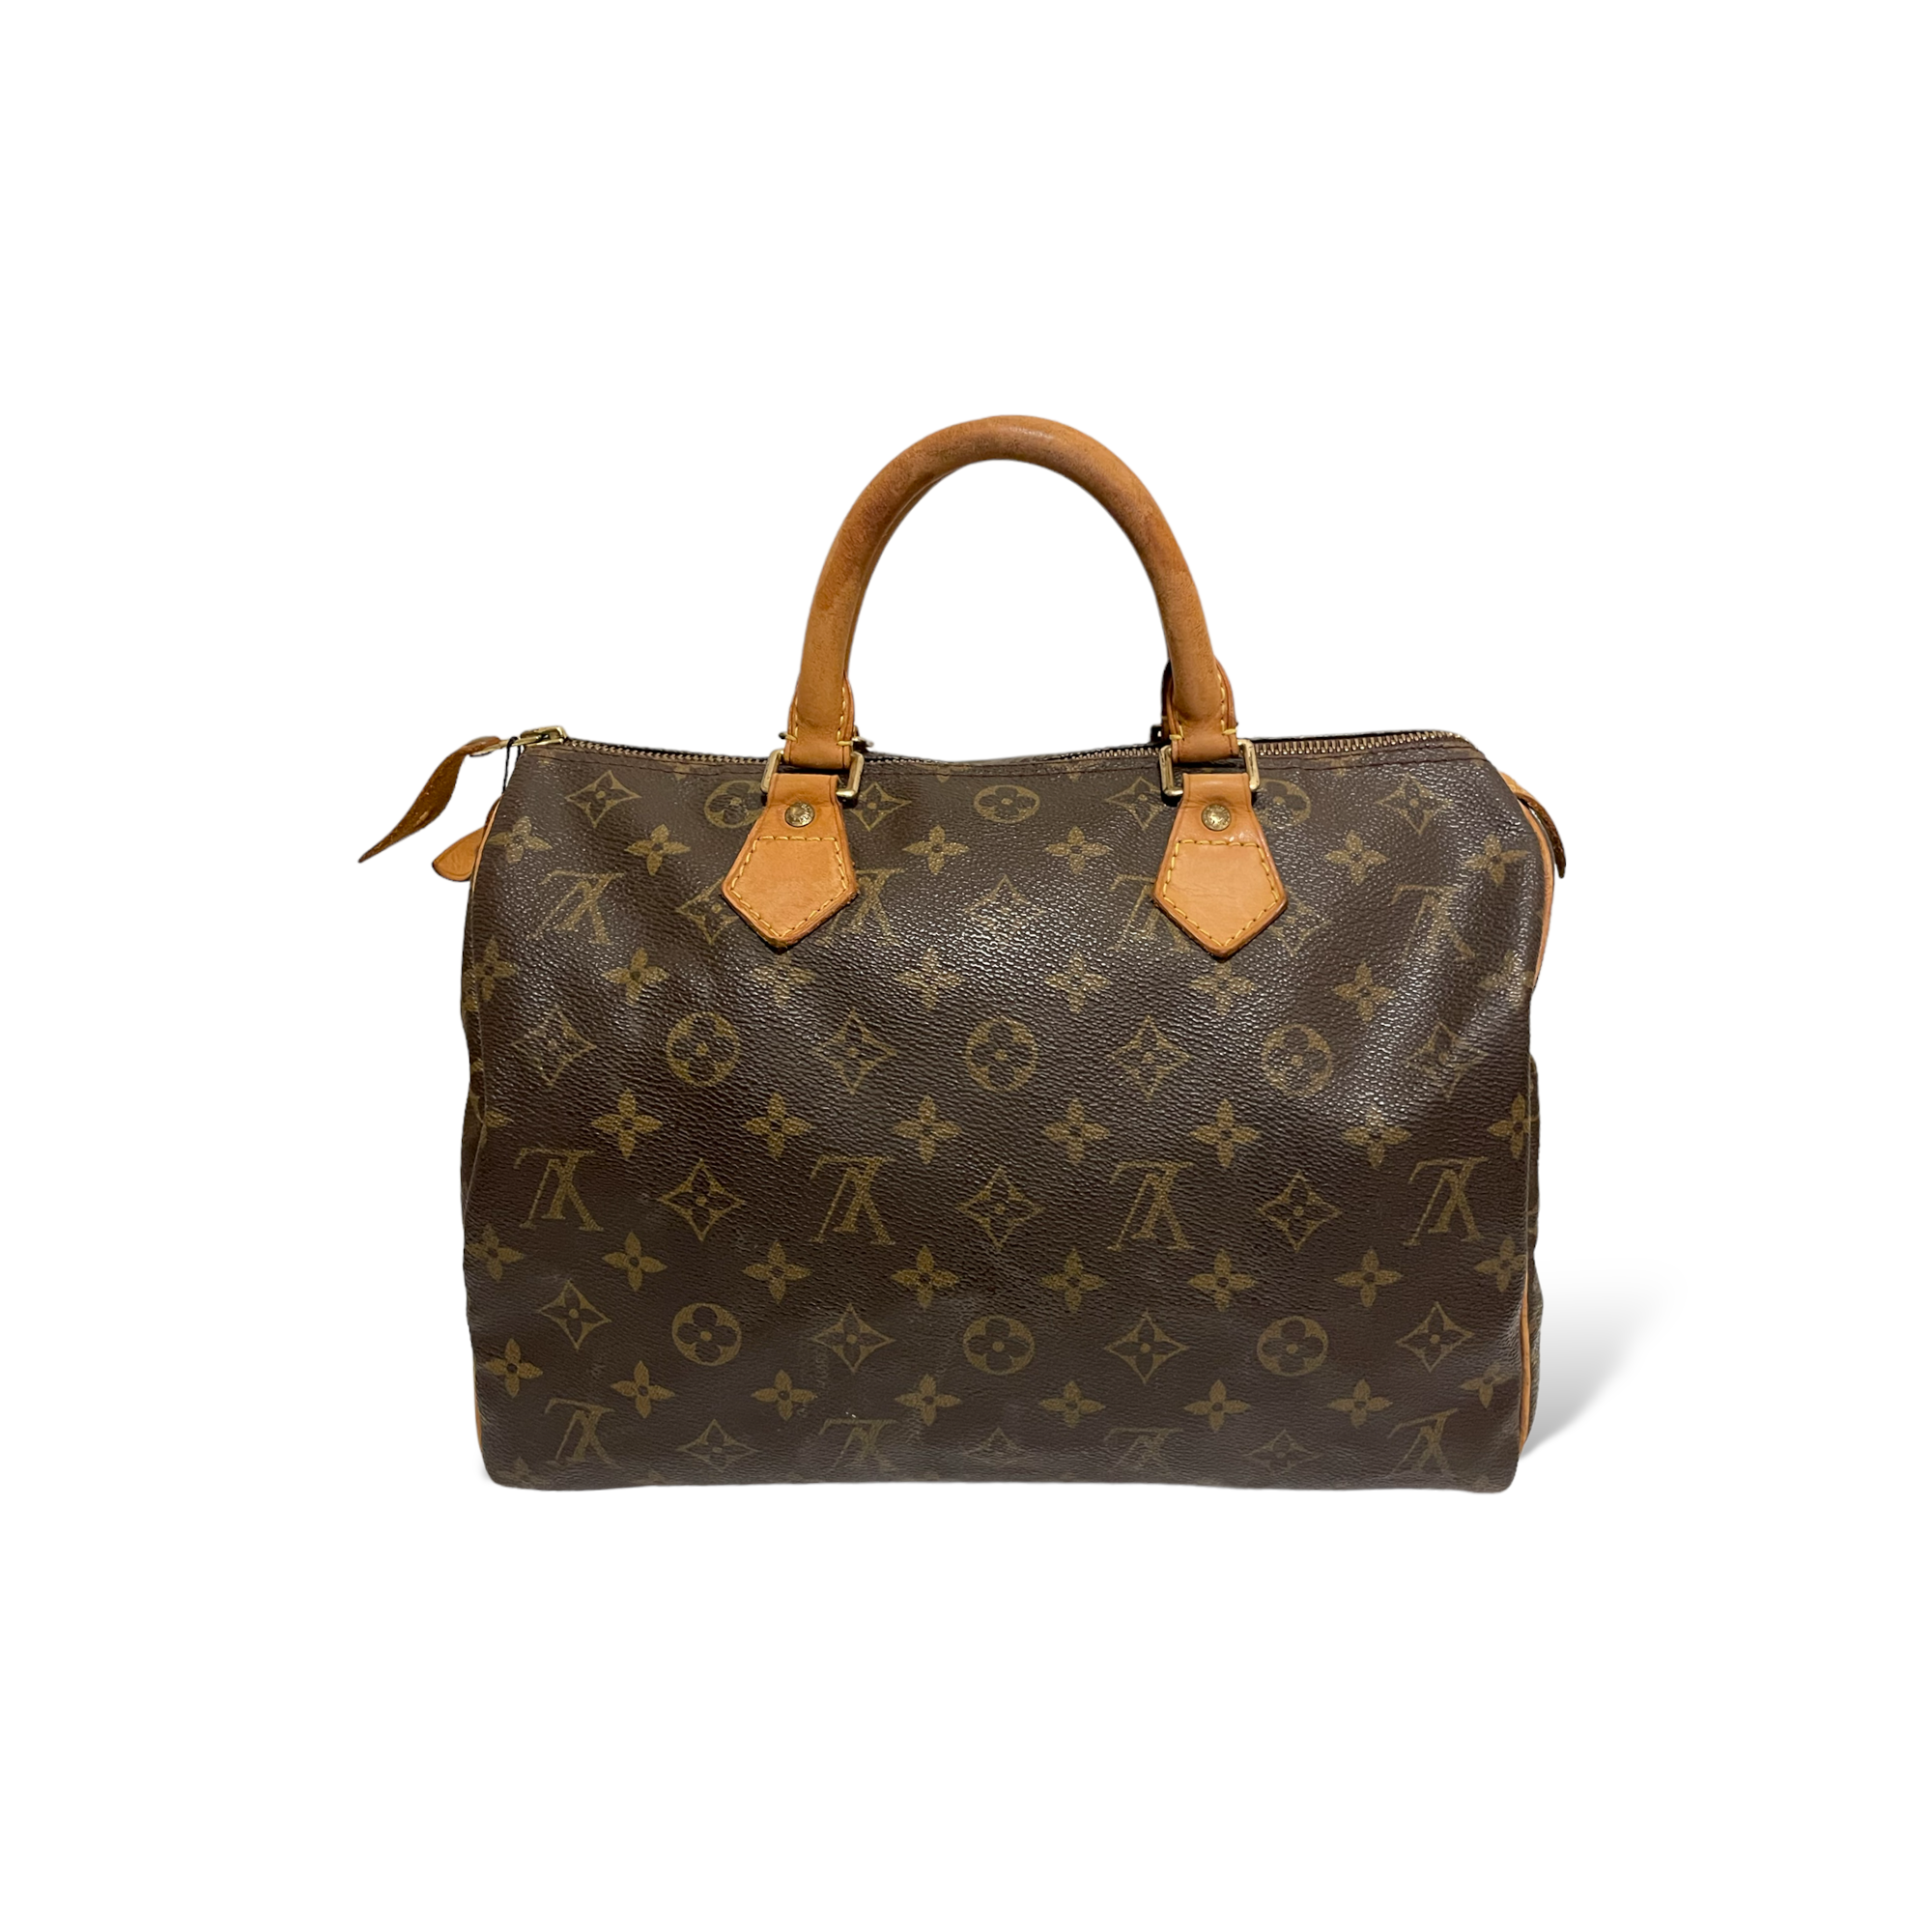 Louis Vuitton Vintage Speedy 30 handbag in iconic Monogram coated canv